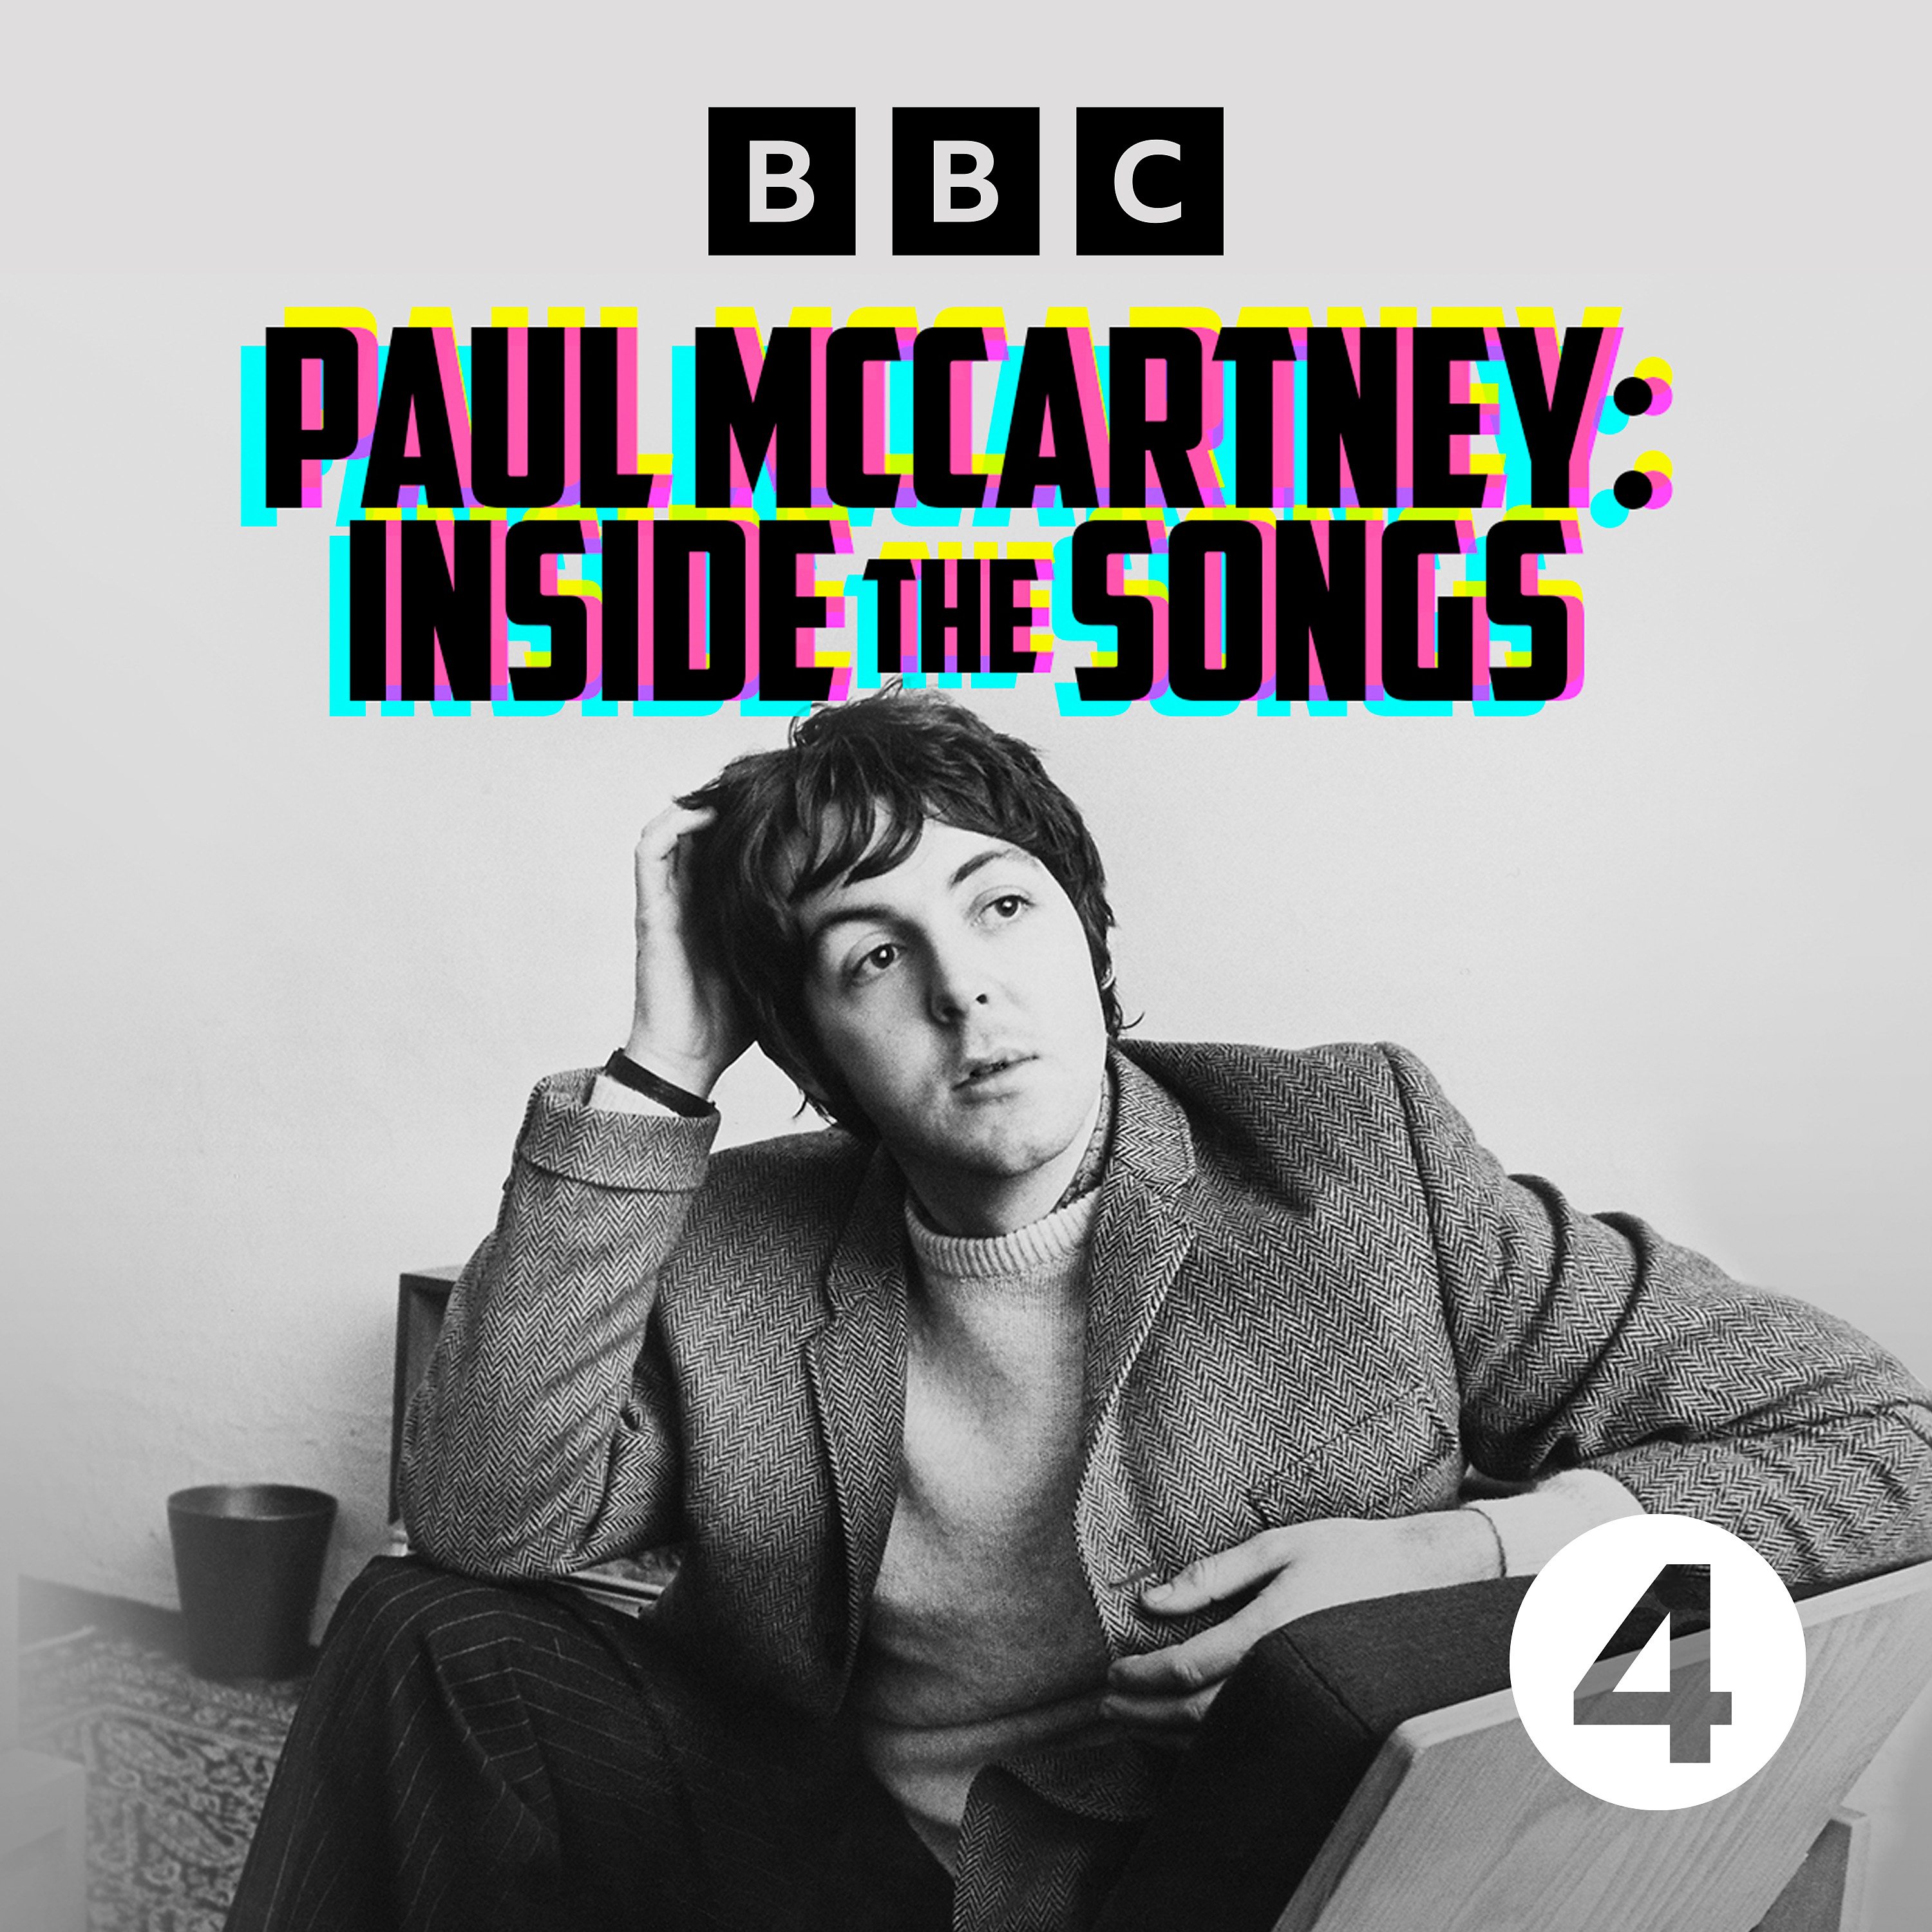 Paul McCartney: Inside the Songs podcast show image